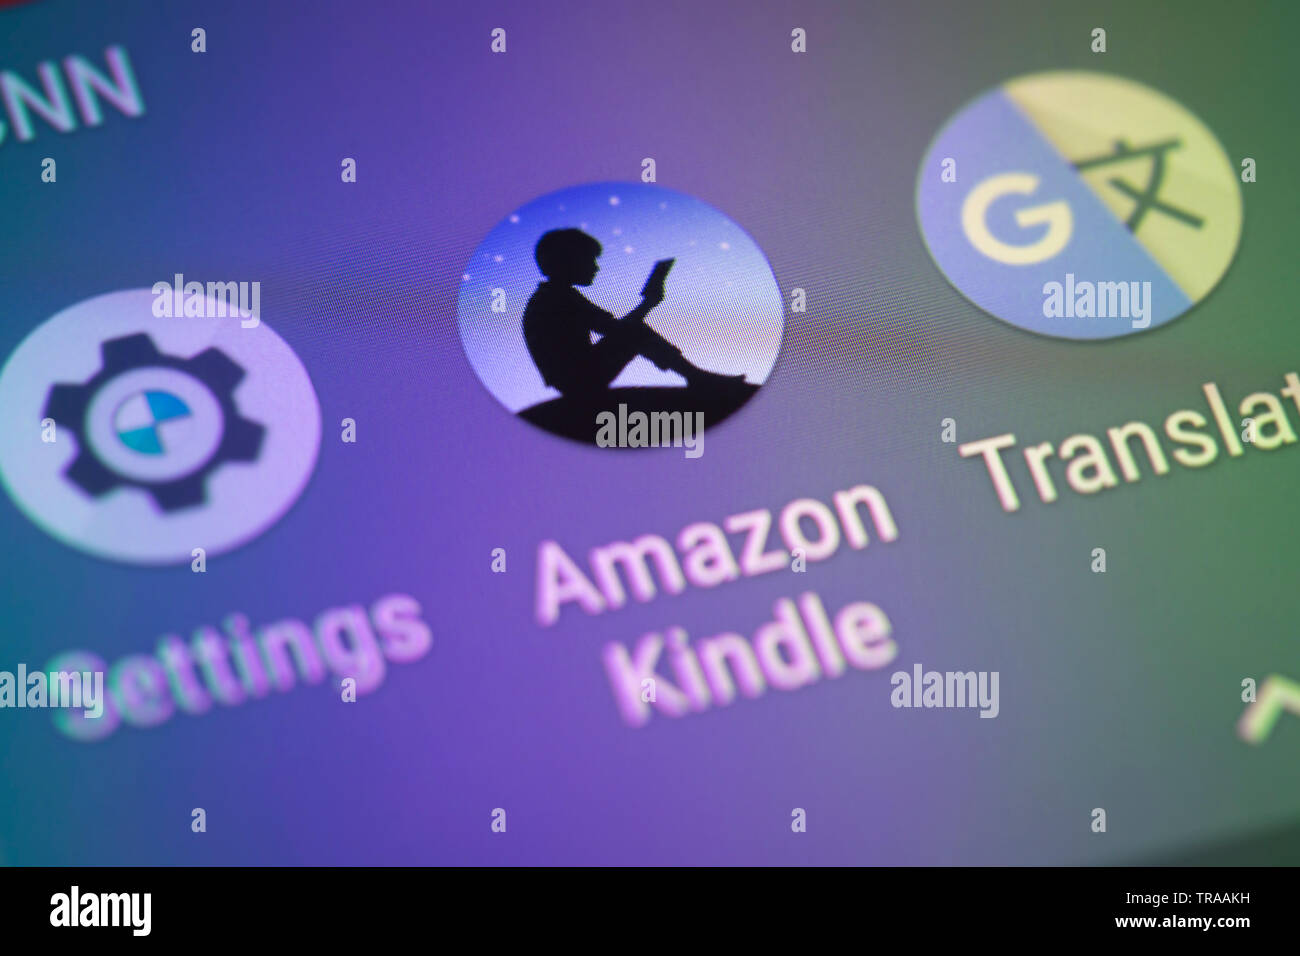 Amazon kindle logo icon on mobile phone screen Stock Photo